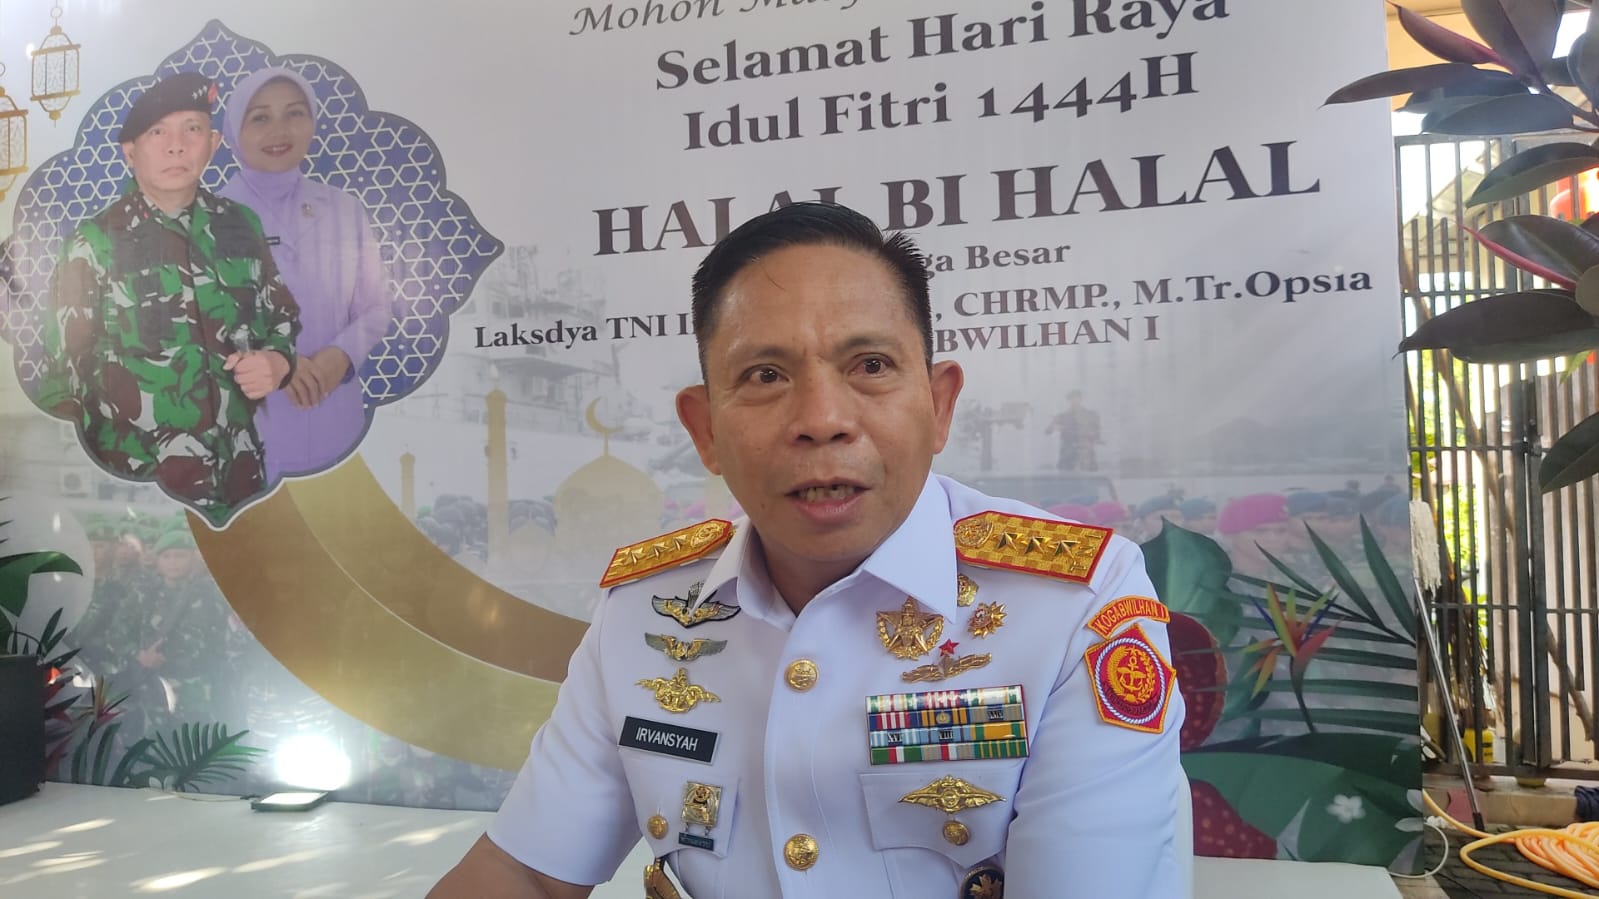 Selain Laksdya TNI Irvansyah, Ini Sederet Putra Daerah Bengkulu Berpangkat Jenderal 